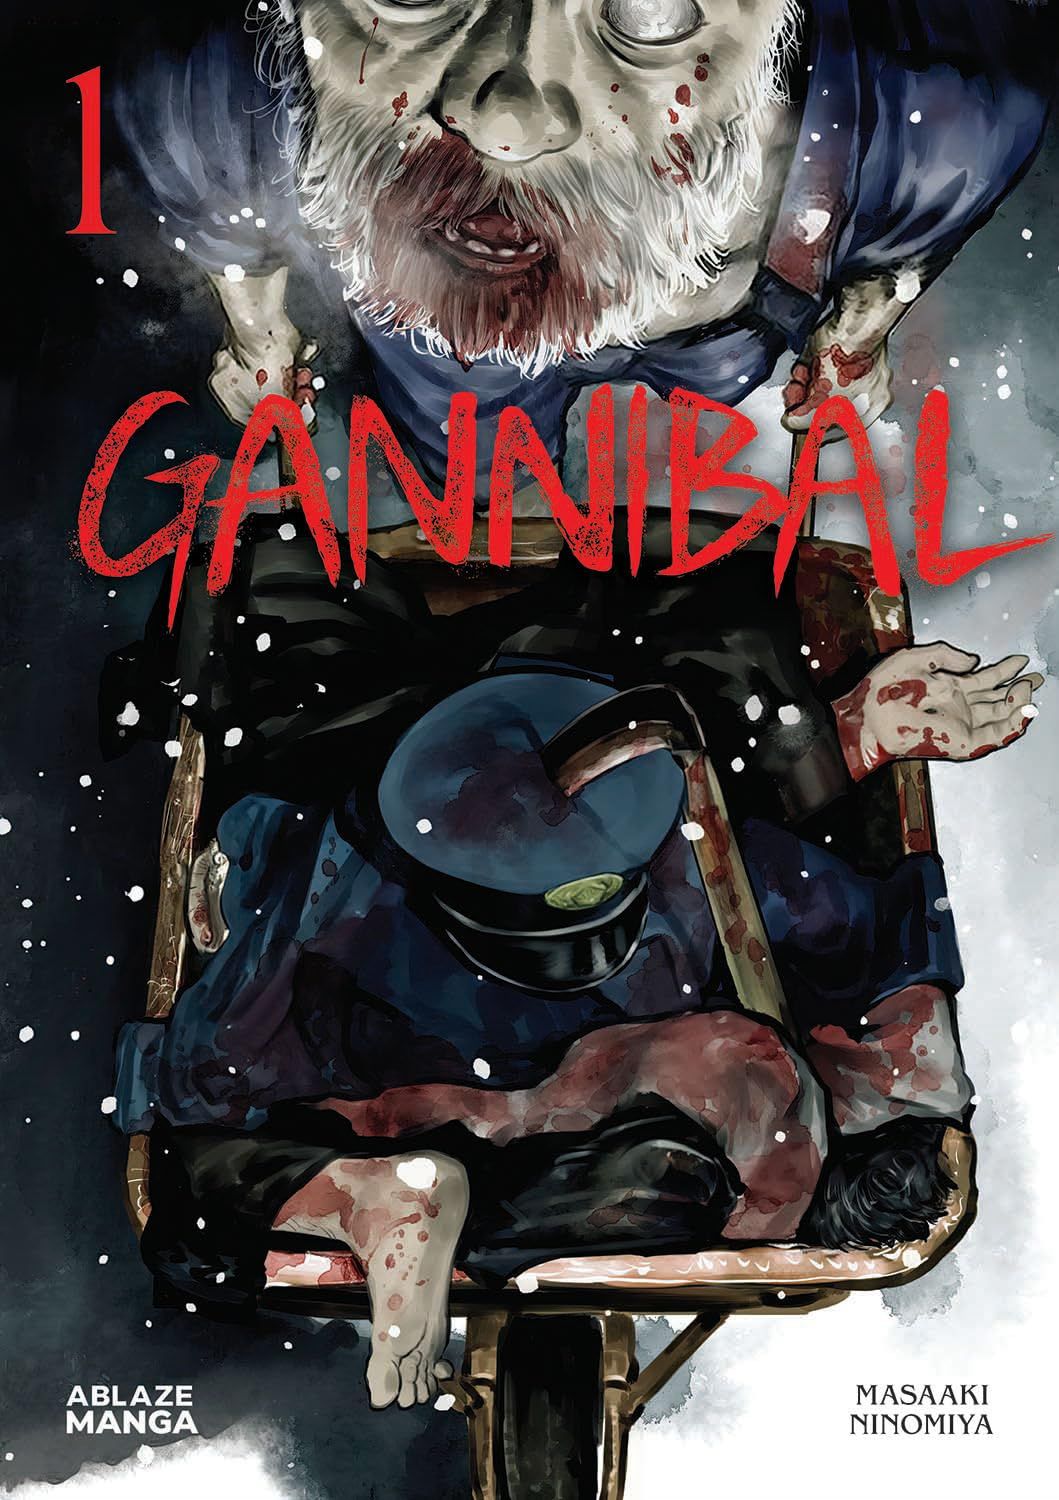 Gannibal by Masaaki Ninomiya cover